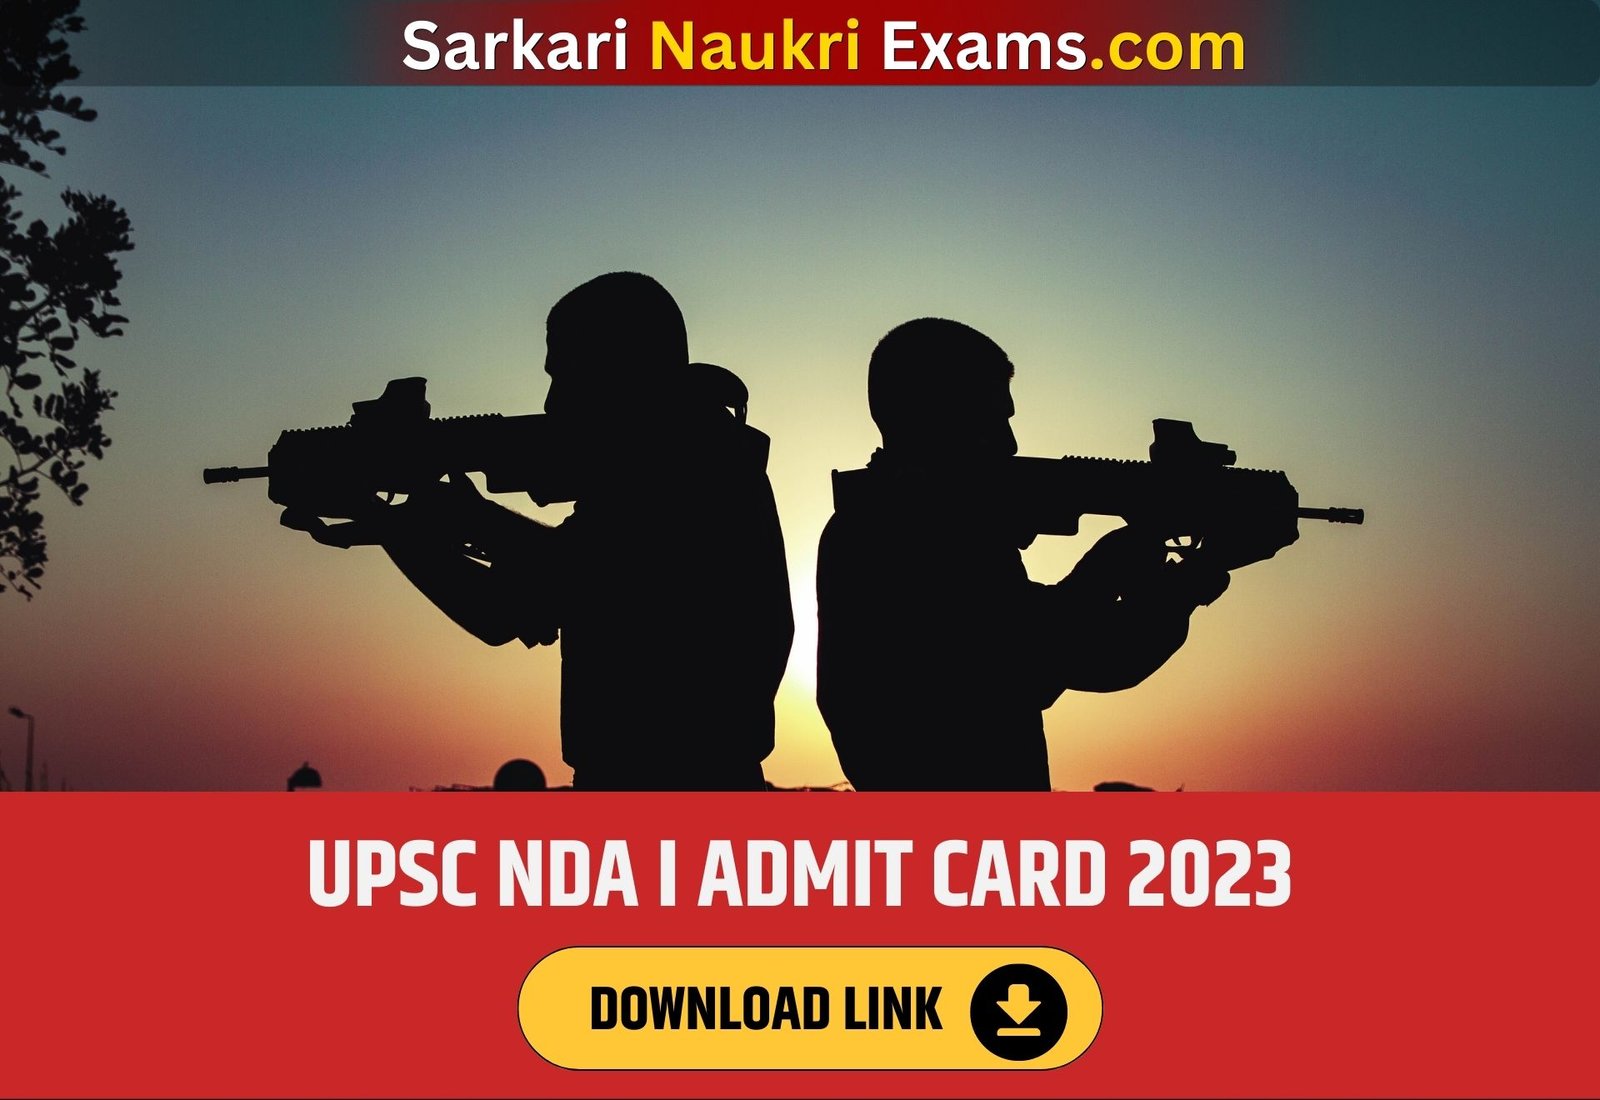 UPSC NDA I Admit Card 2023 | Download Link, Exam Date